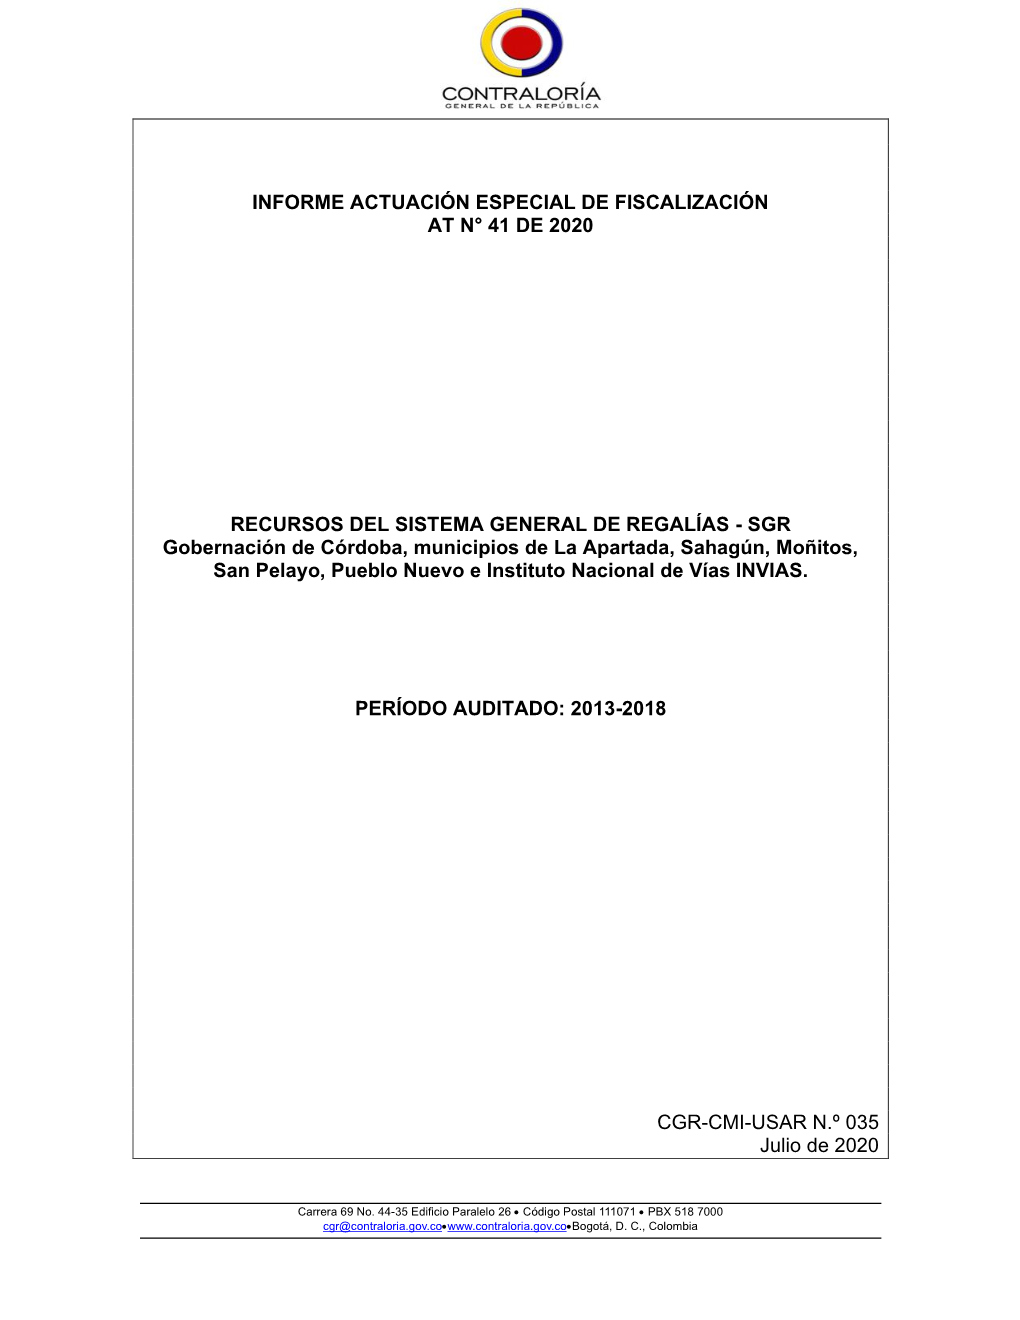 Informe Actuación Especial De Fiscalización at N° 41 De 2020